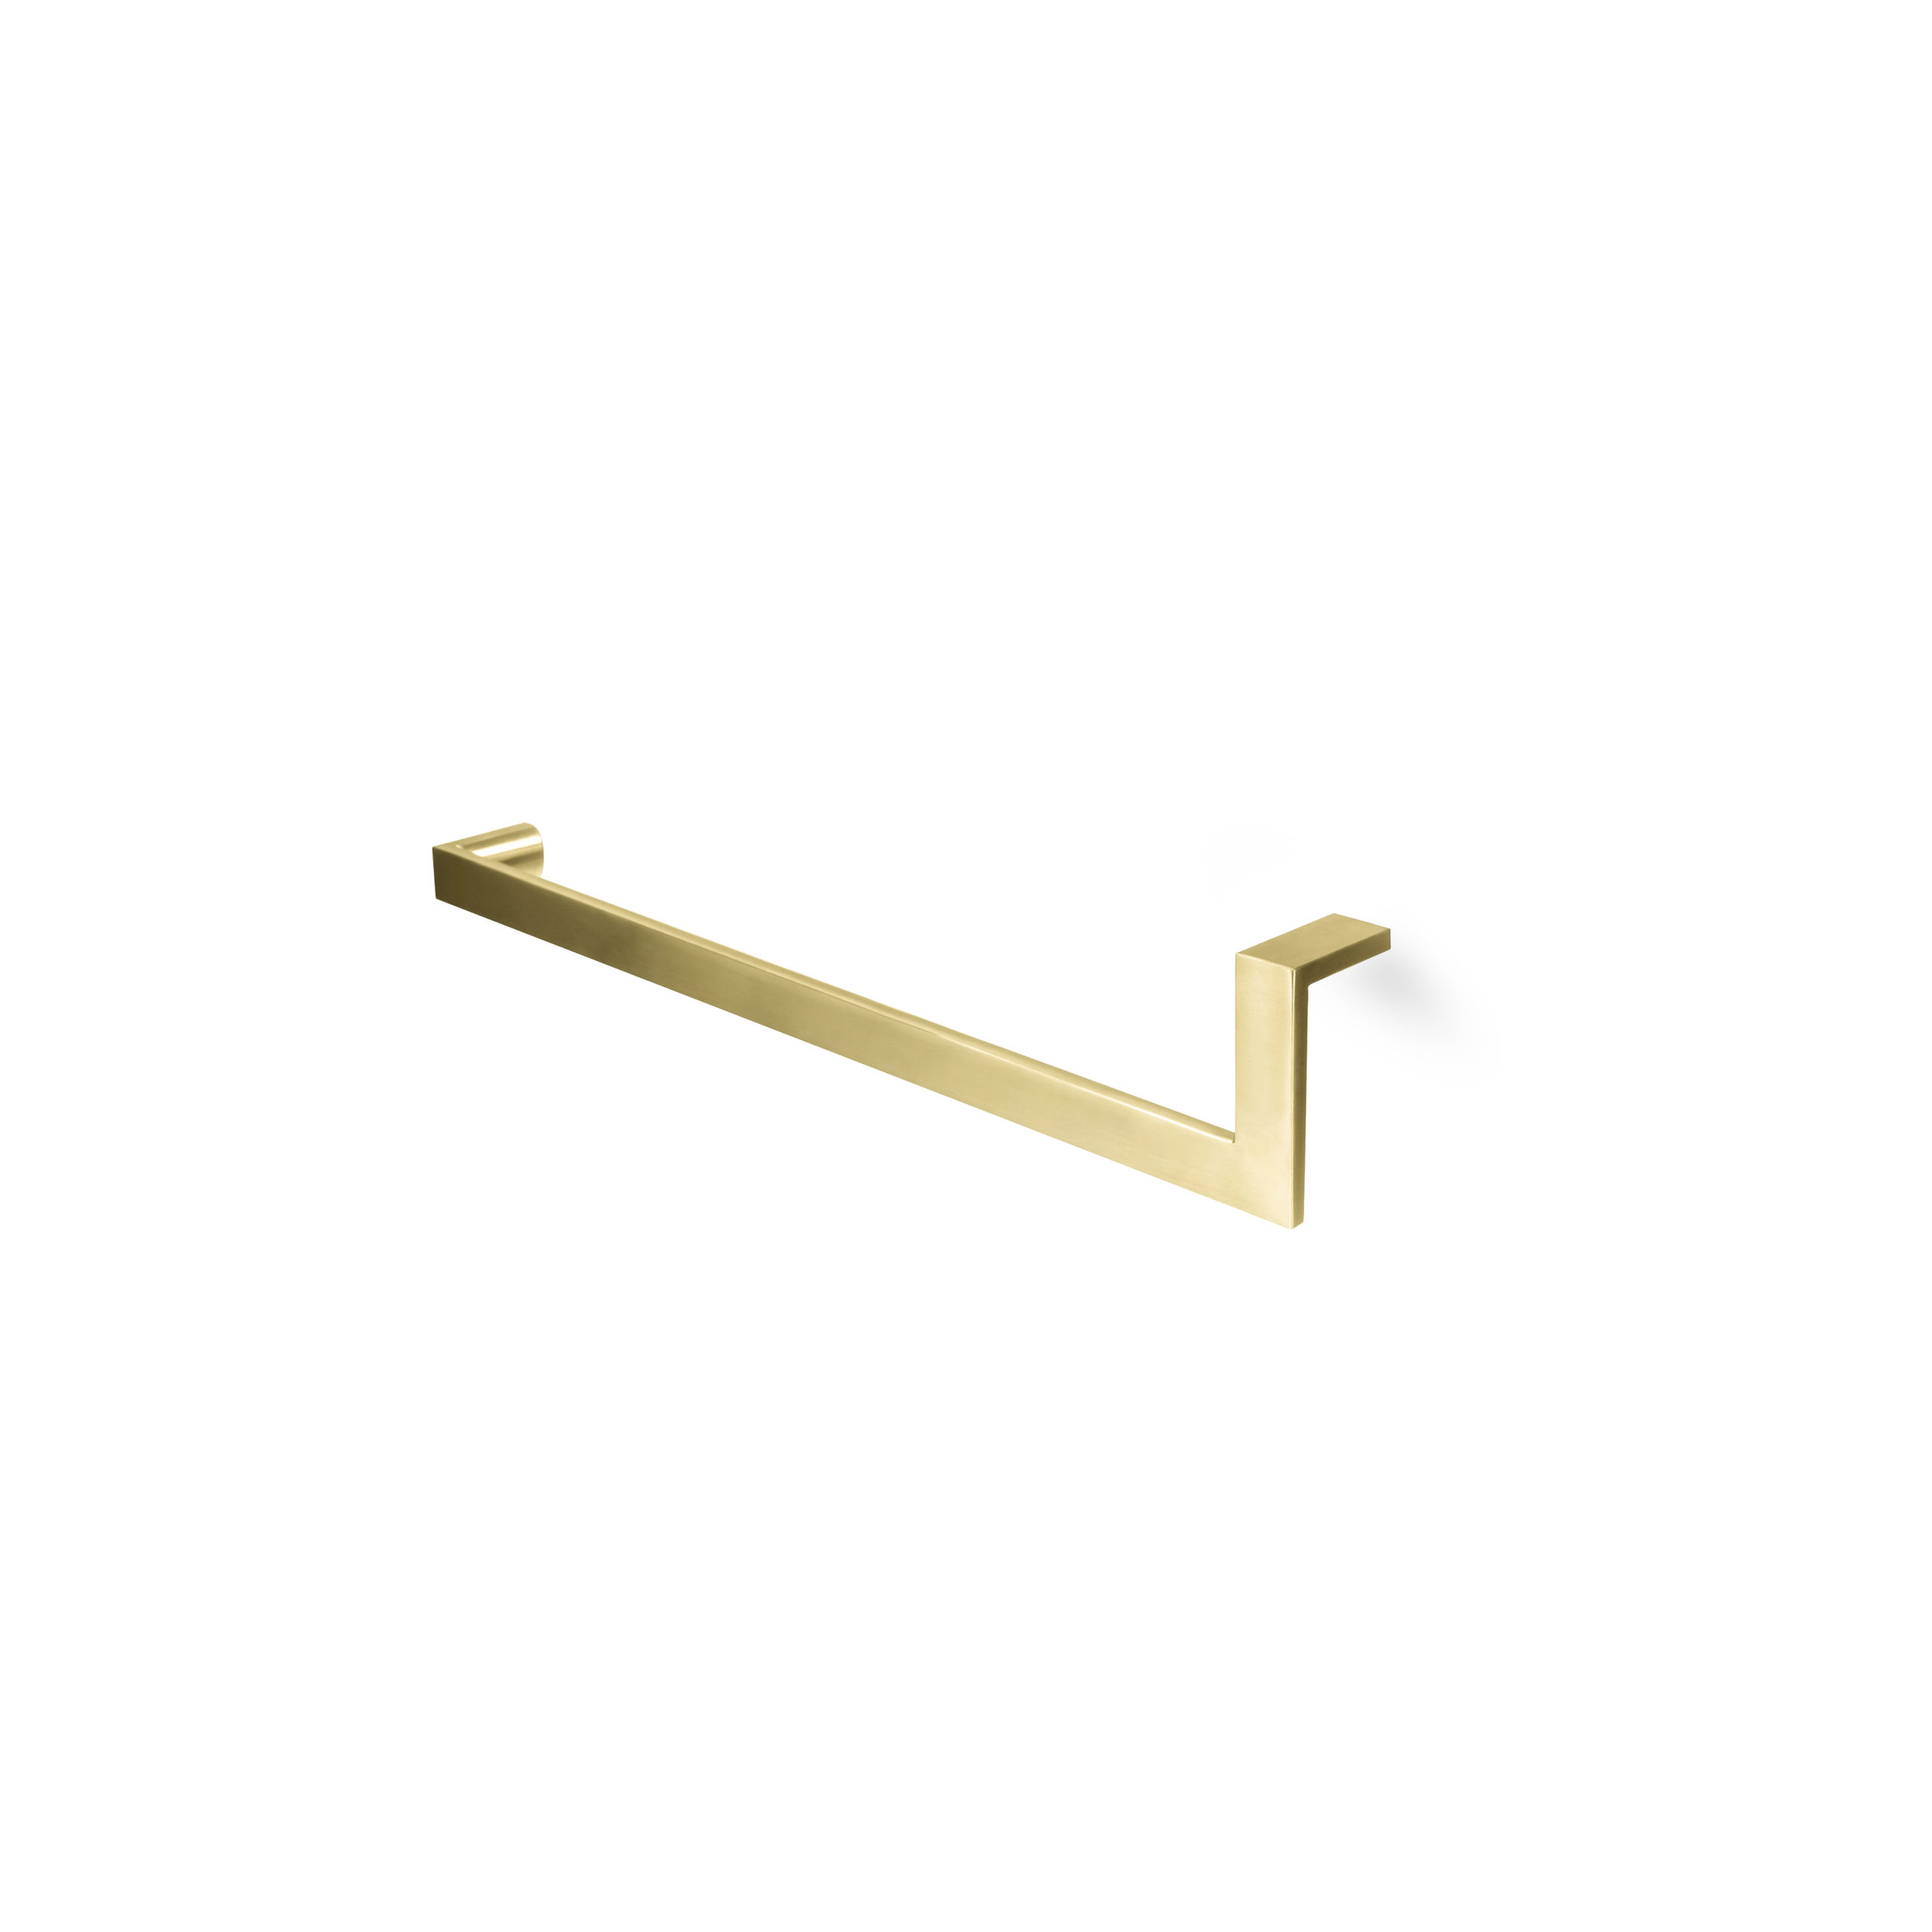 Satin brass modern door handle - surface mount - 18 inch length - product featured image - SKU L 401-1.1 SBZ